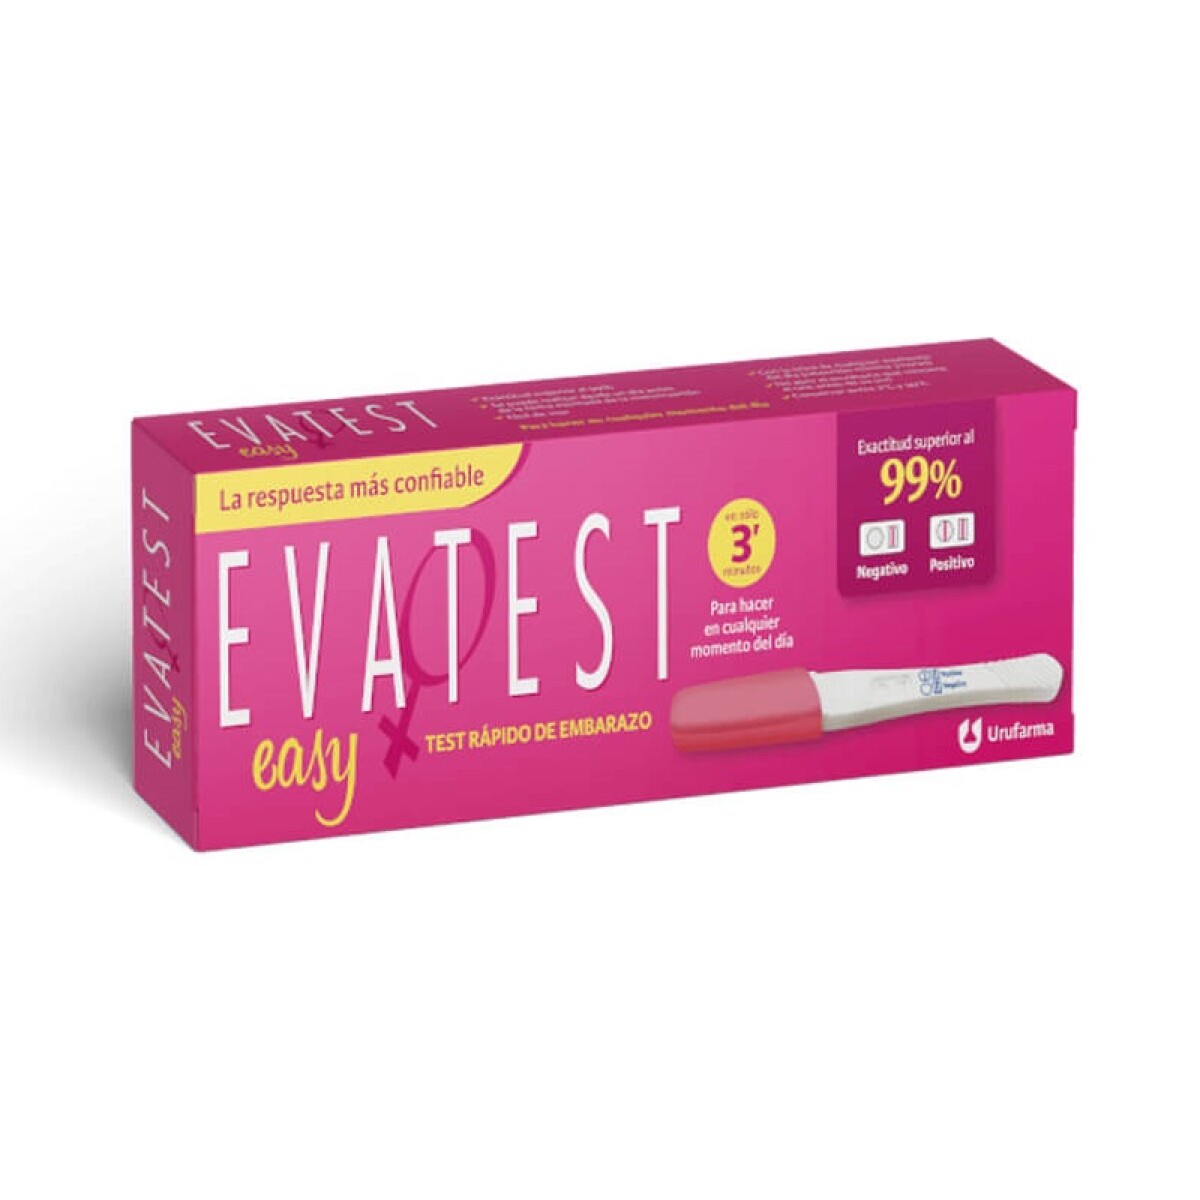 Evatest Easy 1 Test In Vitro 